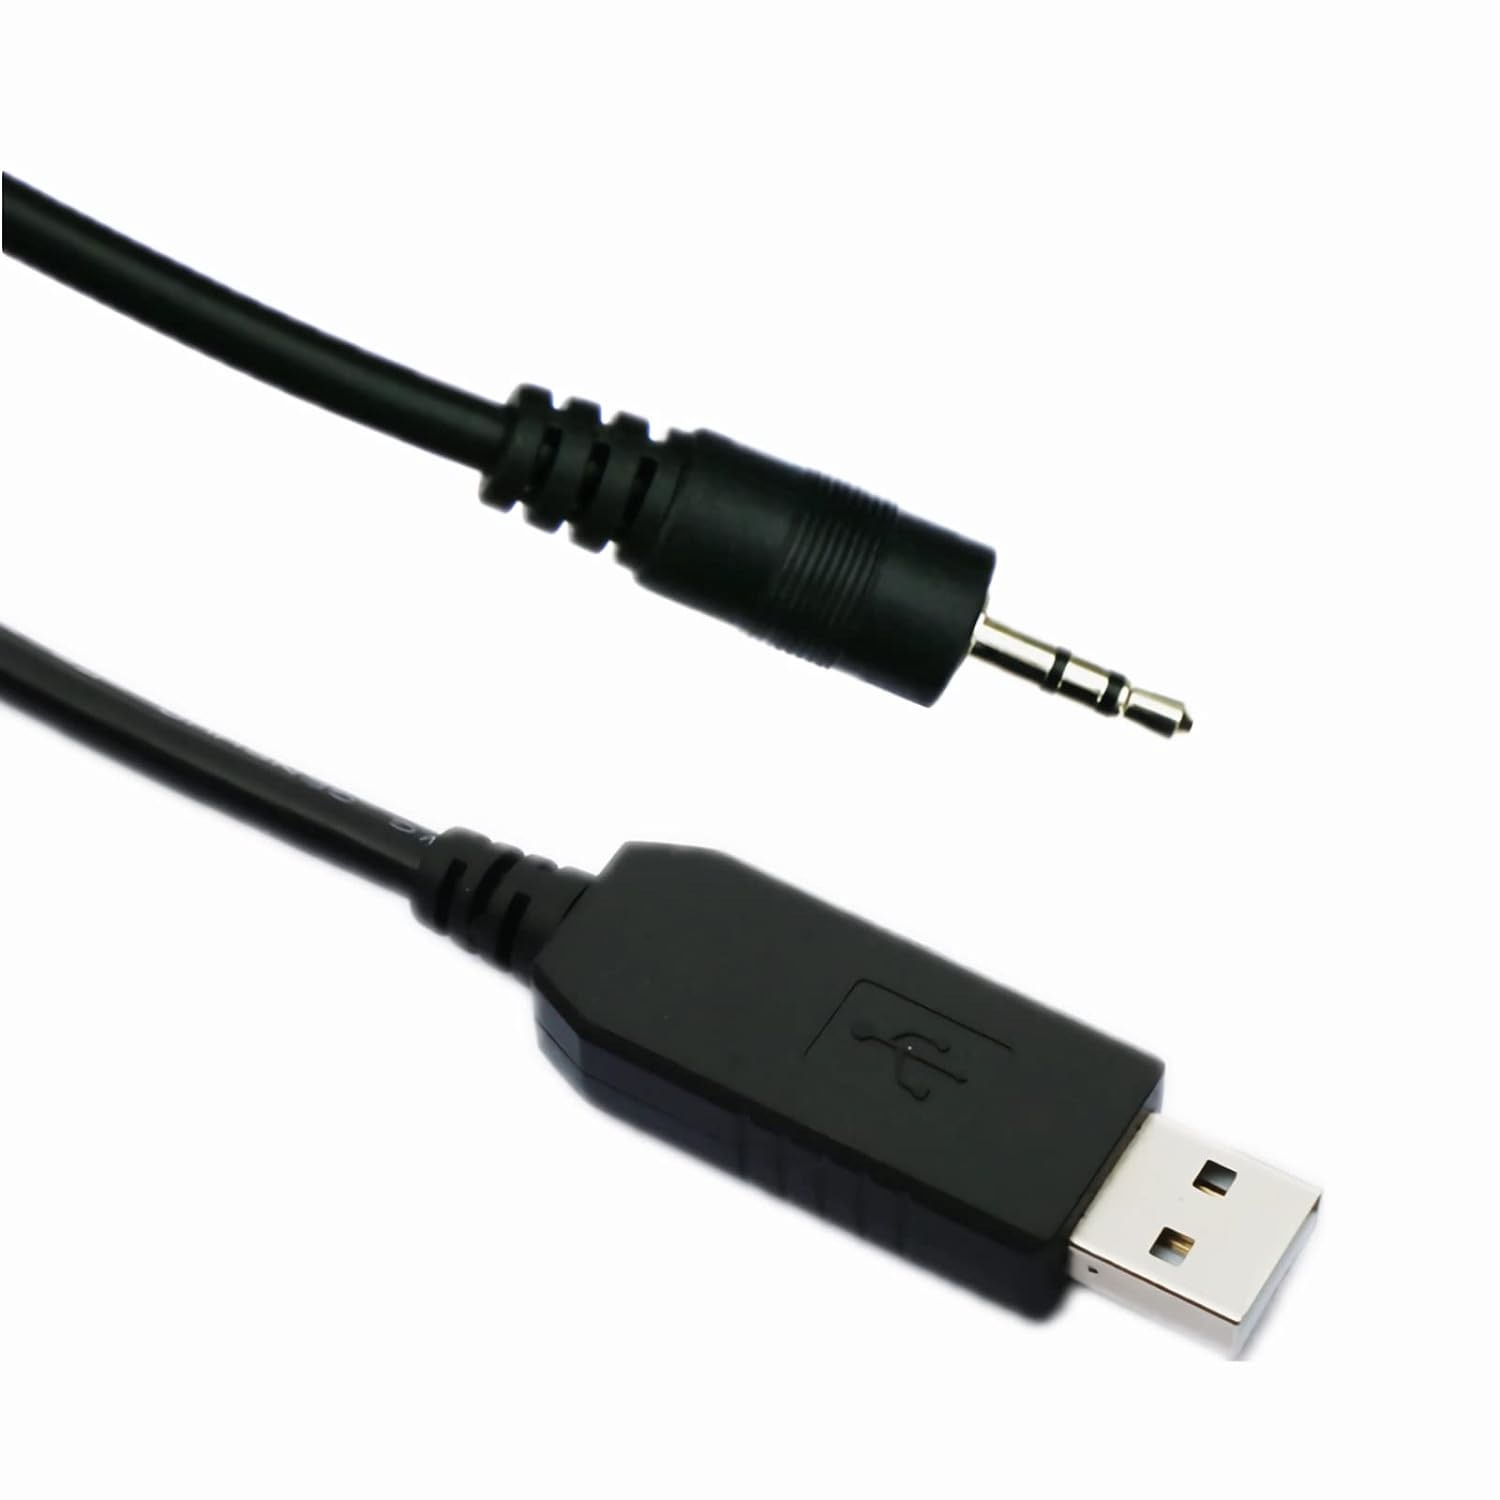 USB 940-0299A Console Cable for APC UPS Network Management Card 2 AP9630 AP9631